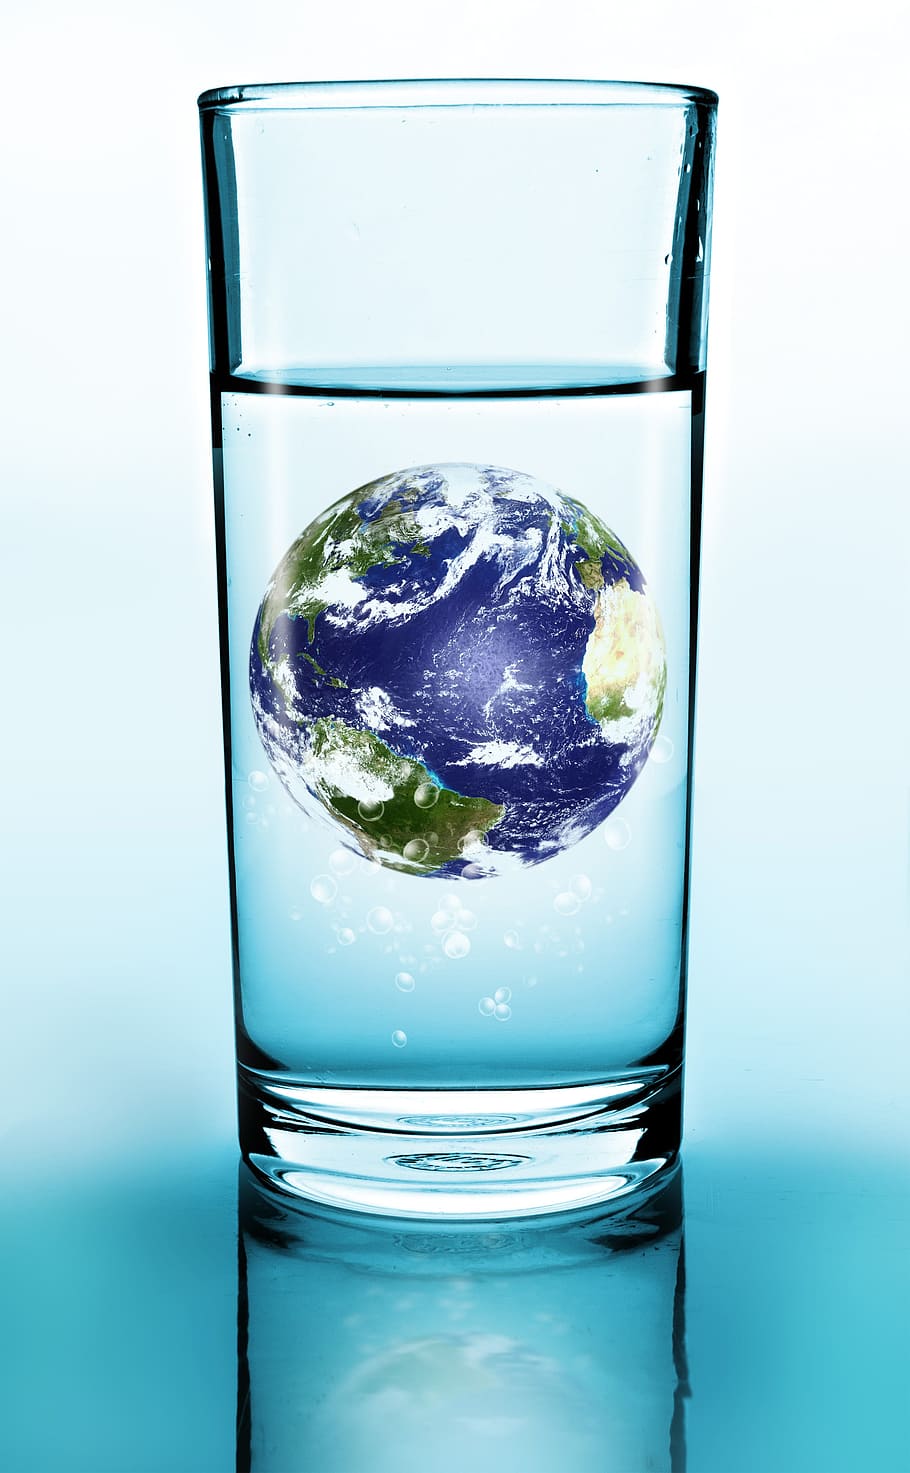 clear, drinking glass, globe, inside, illustration, glass, drink, water, earth, blue